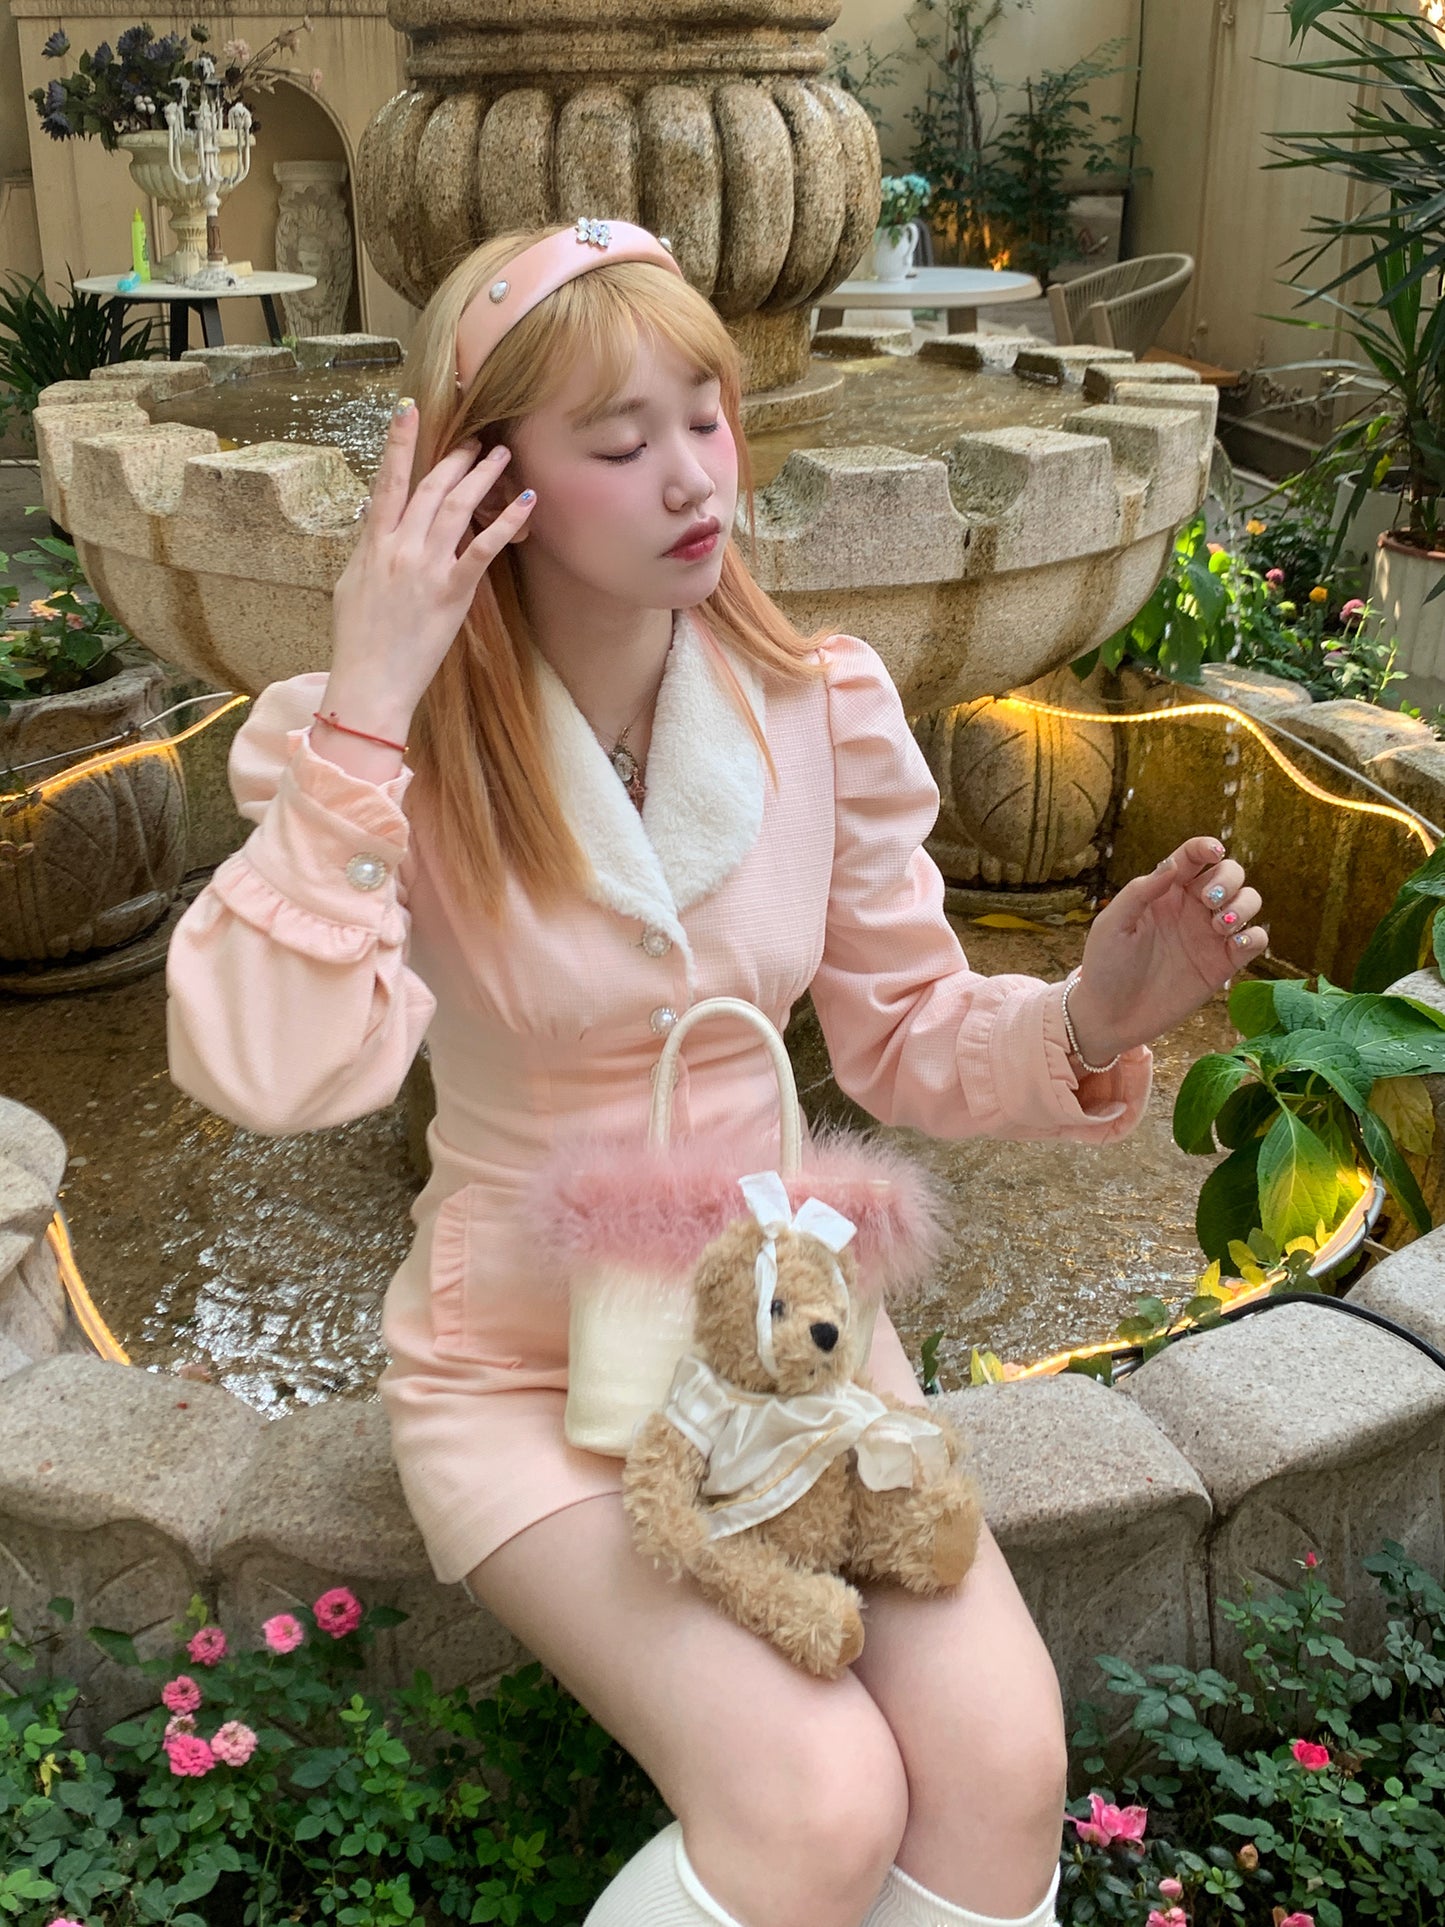 Picnic Girl Cute Fluffy Fur Collar Wrist Puff Sleeve Orose Pink Jacket Dress